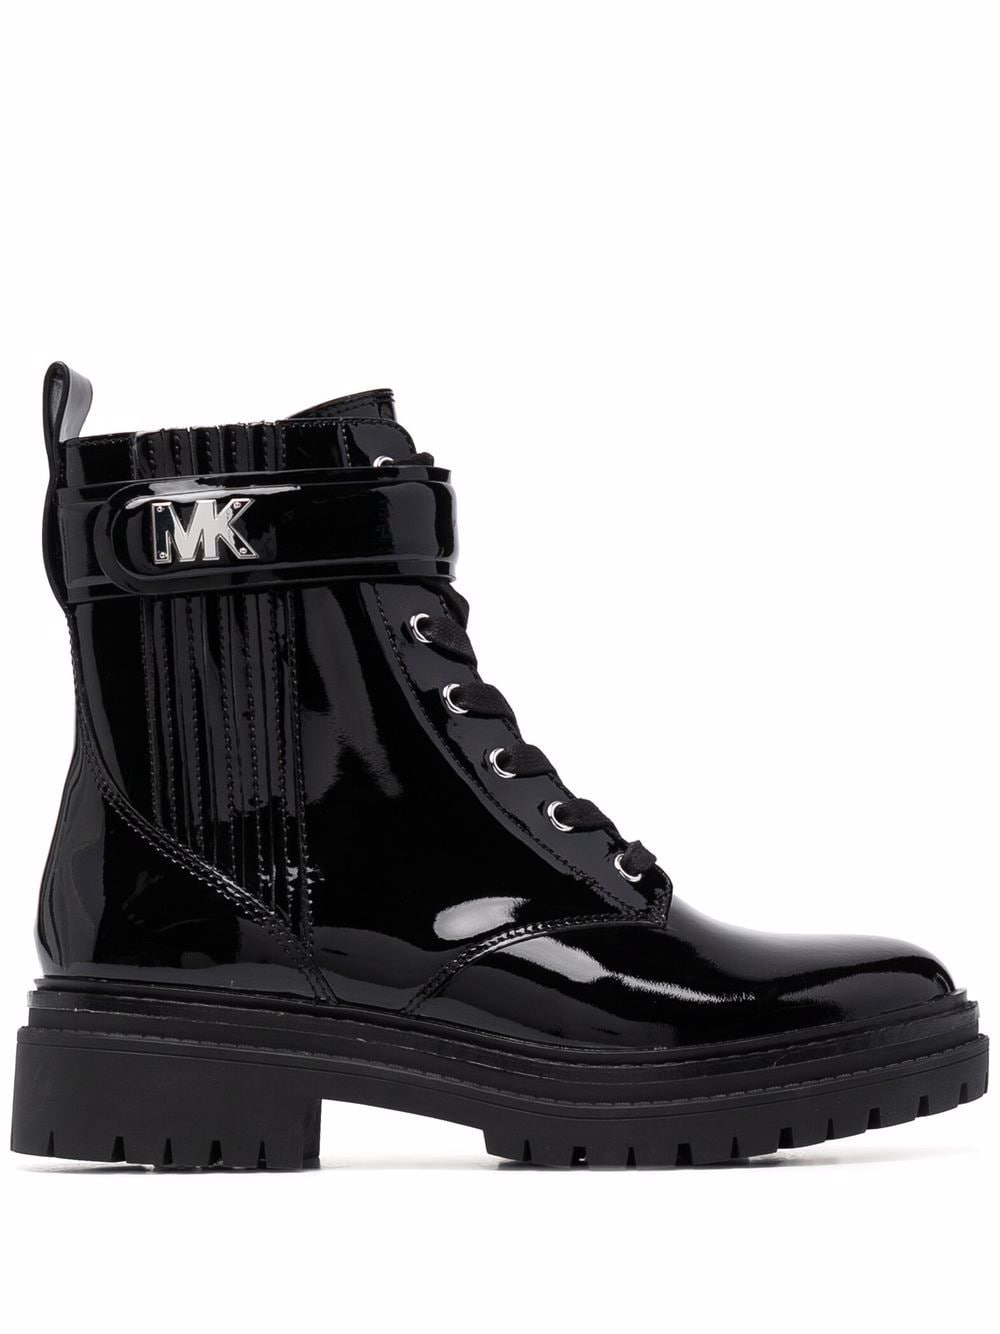 Stark zipped-up boots